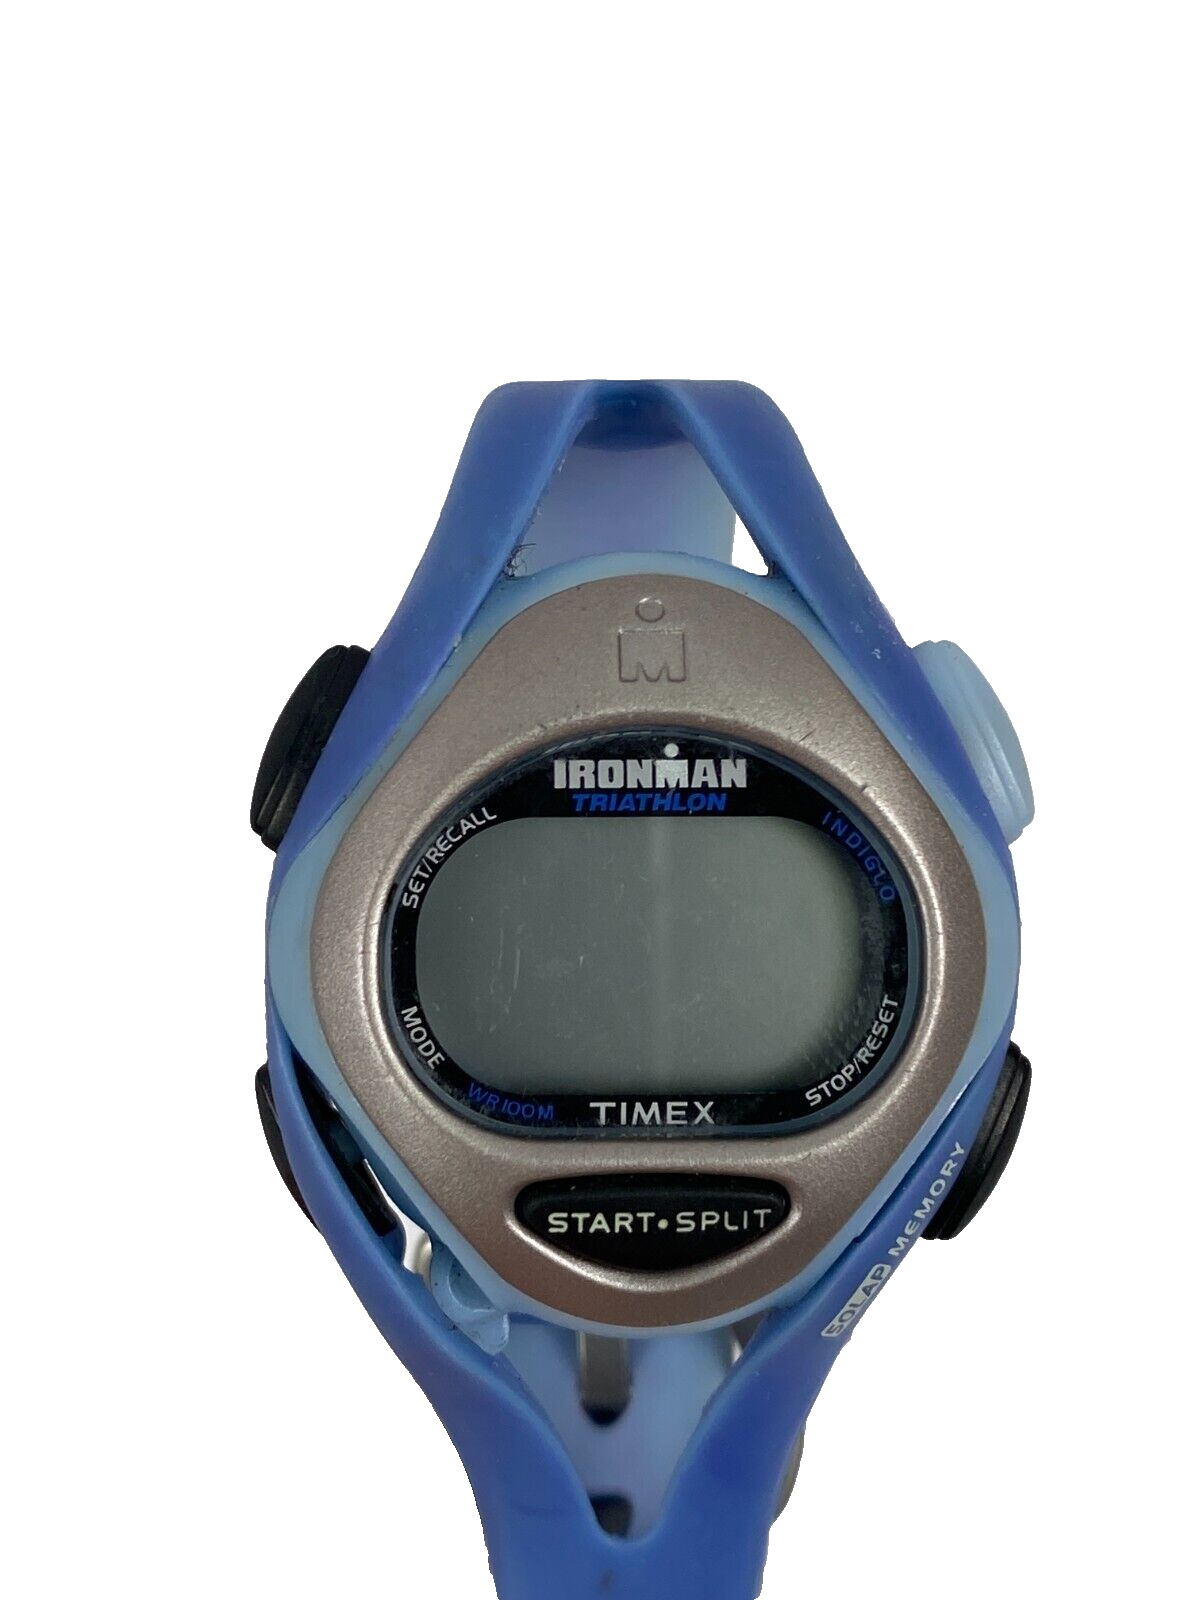 Timex Ironman Triathlon Women’s Watch Digital Blue - $19.95